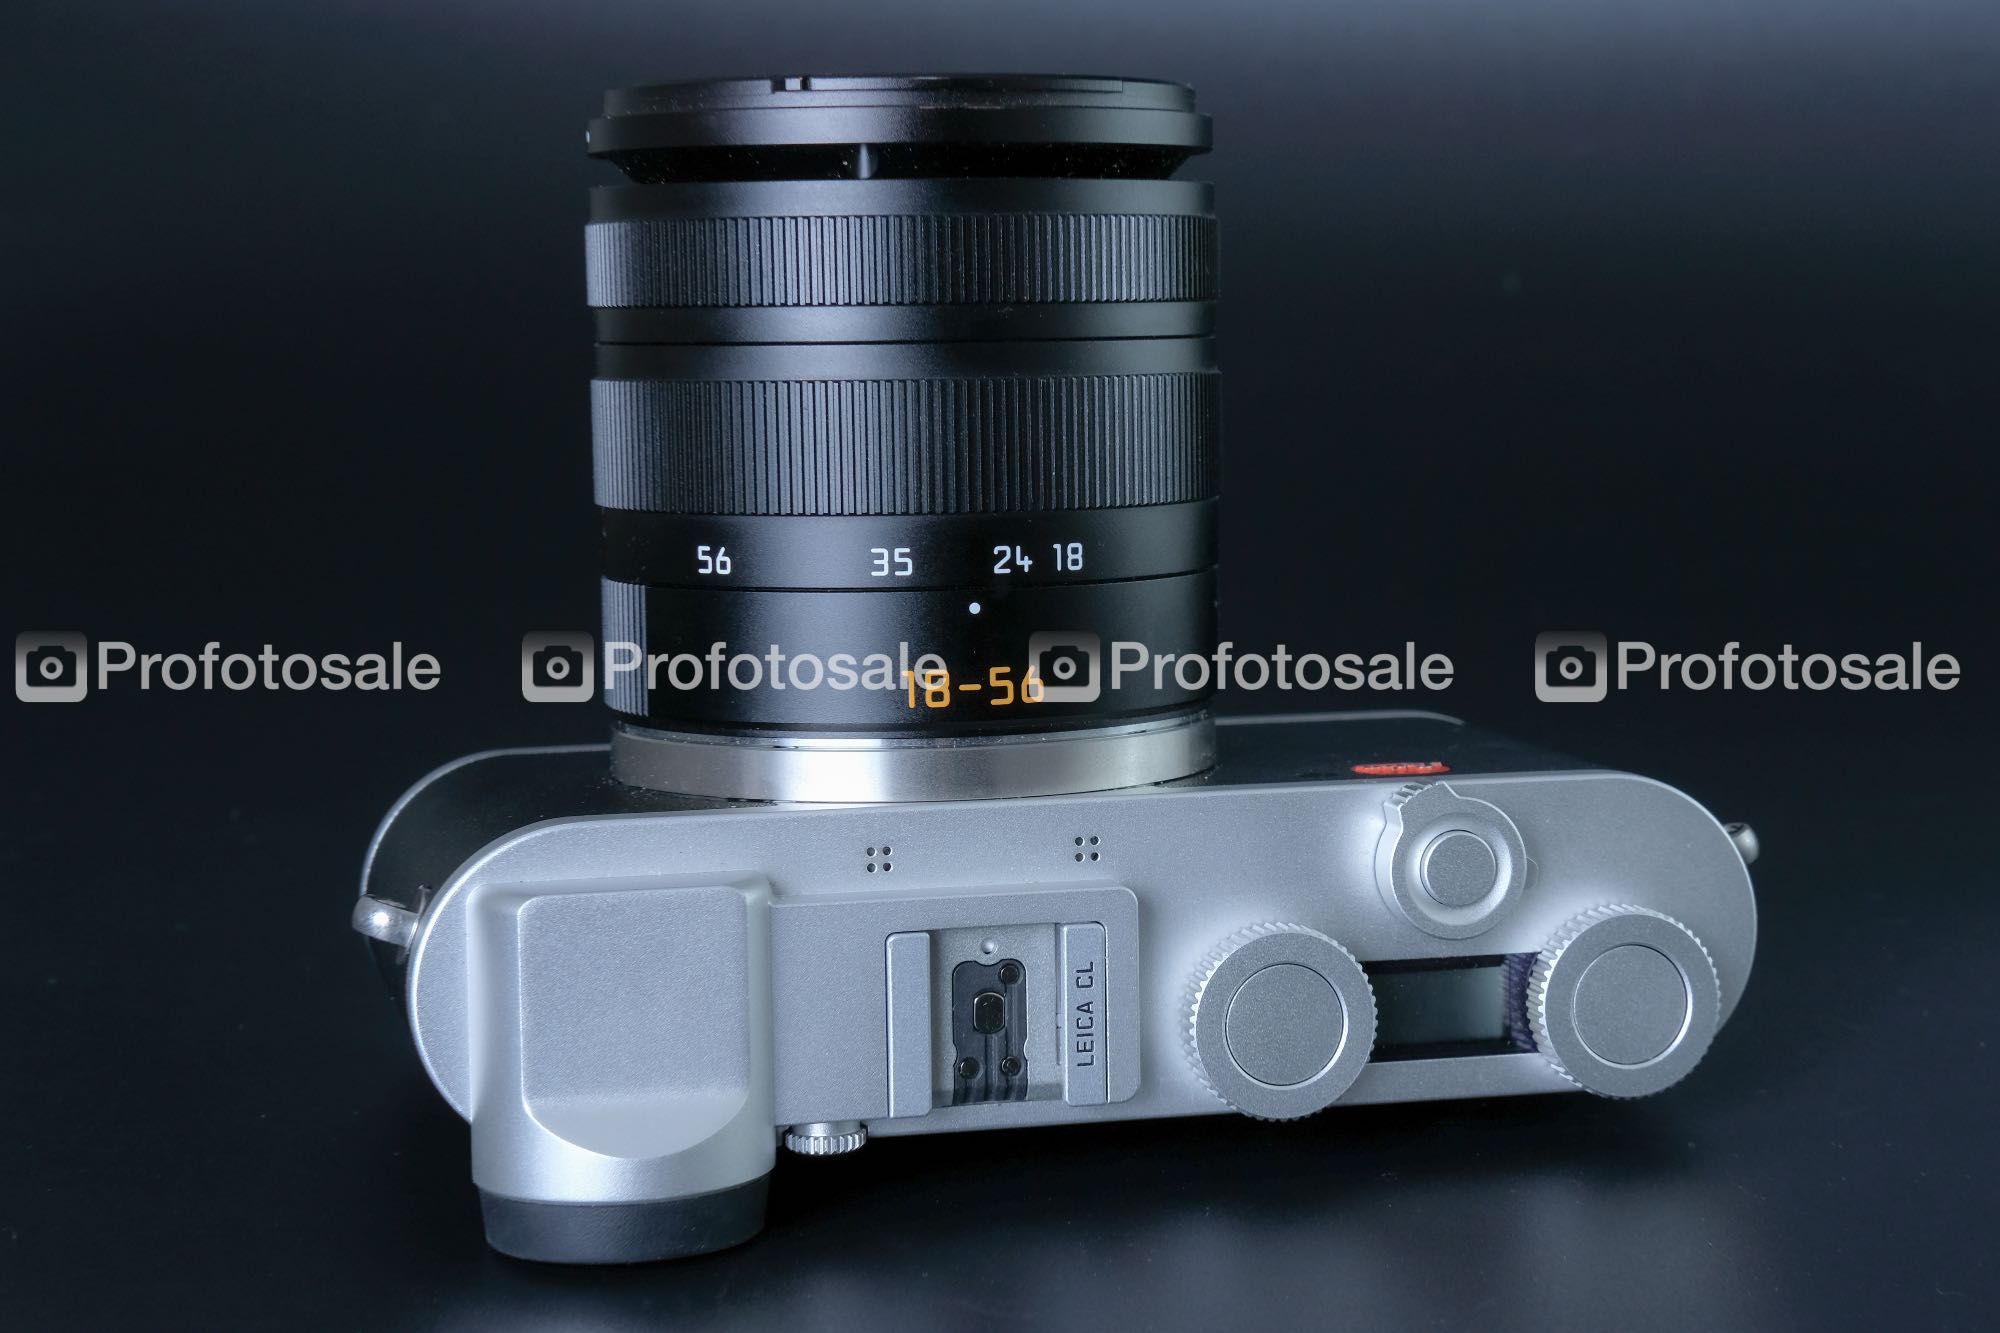 Фотоапарат Leica CL Vario Kit 18-56mm